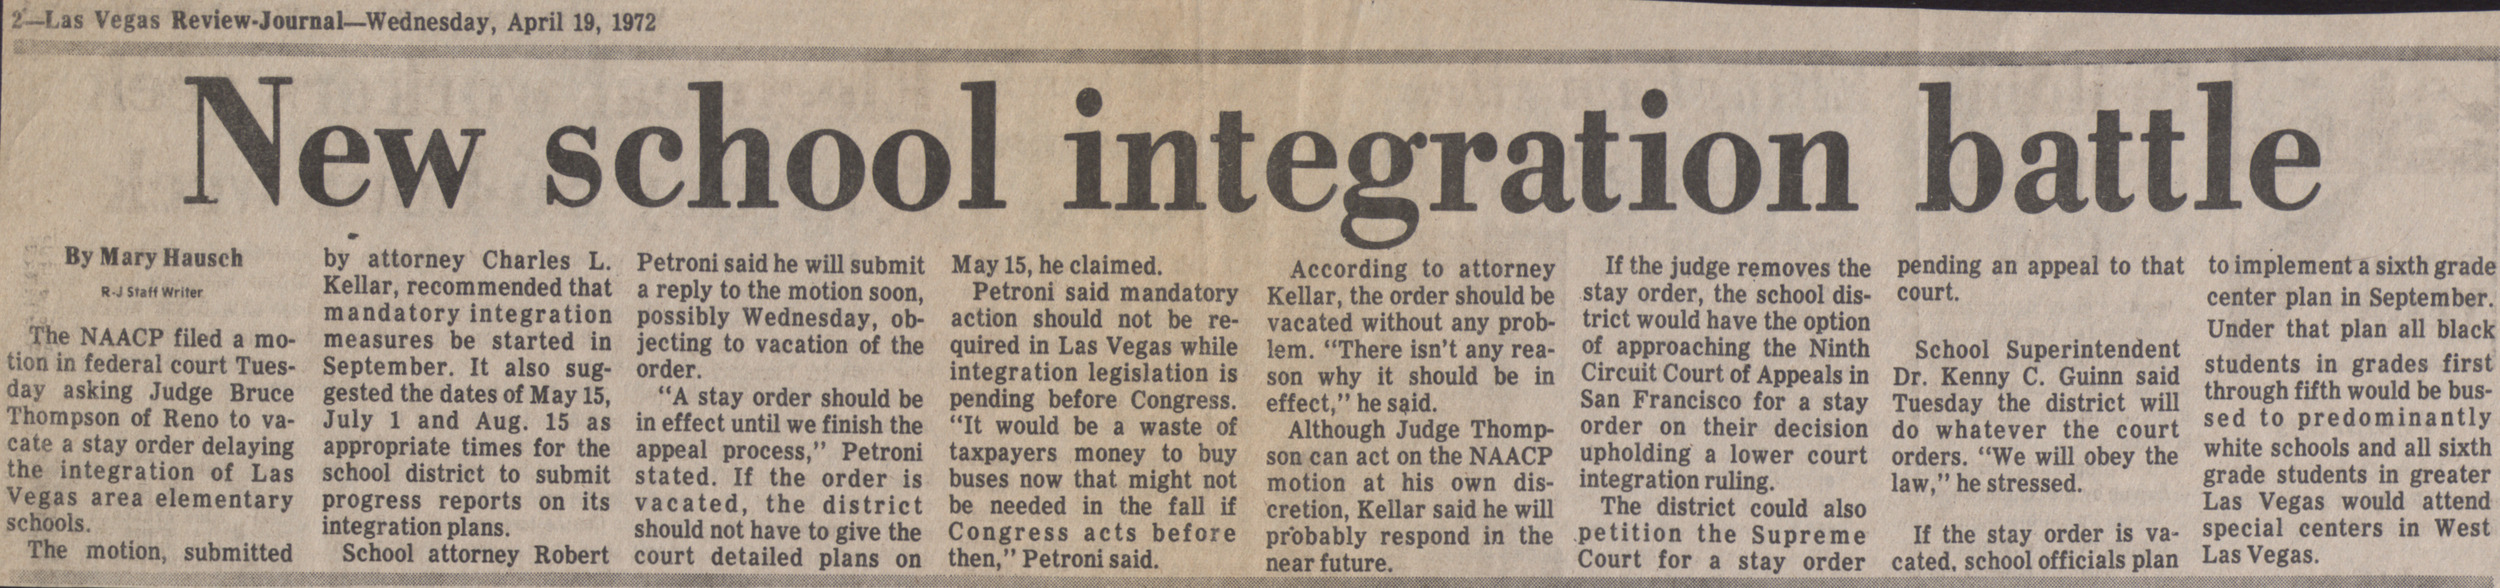 Newspaper clipping, New school integration battle, Las Vegas Review-Journal, April 19, 1972